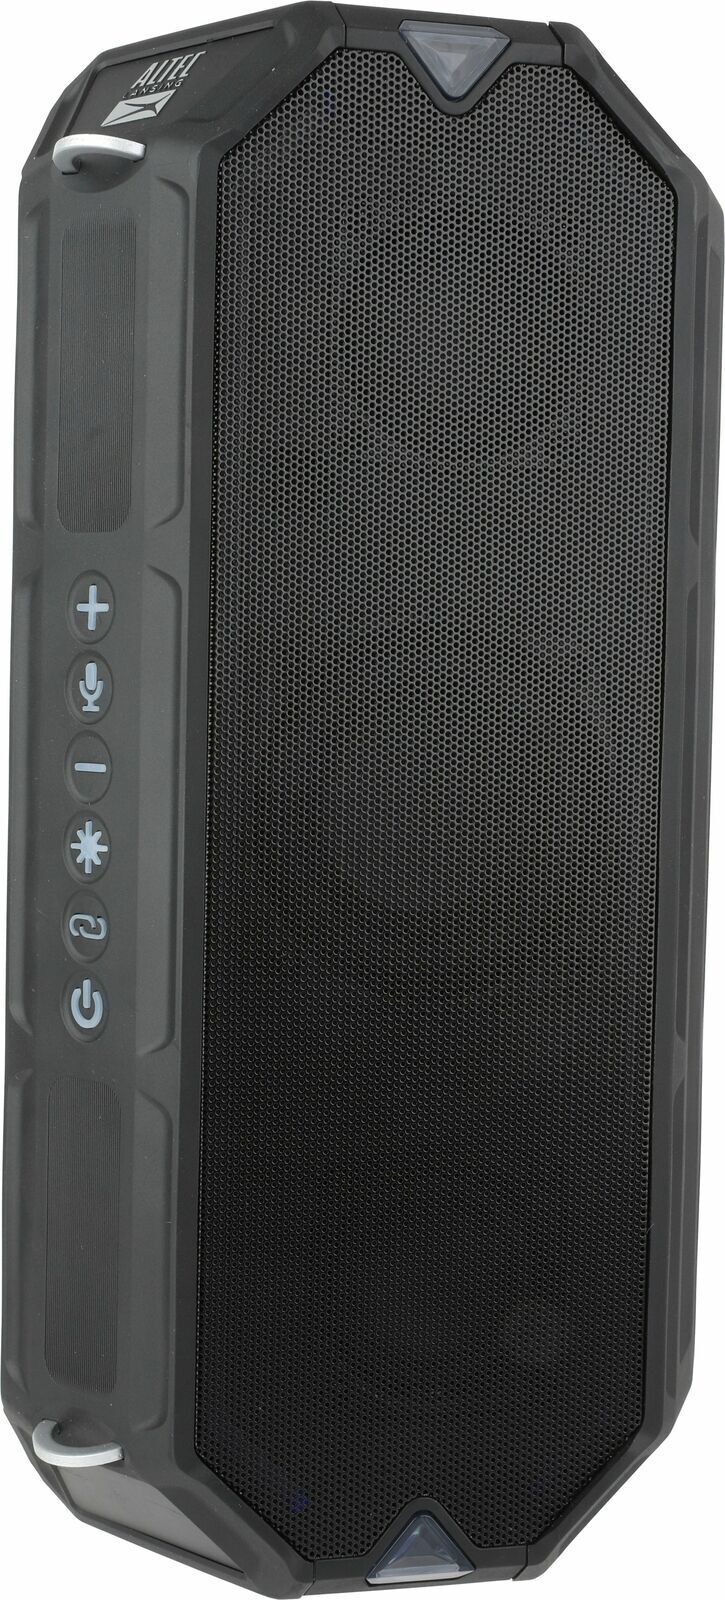 Altec Lansing HydraShock Everything Proof Portable Speaker - Black (IMW1500)™